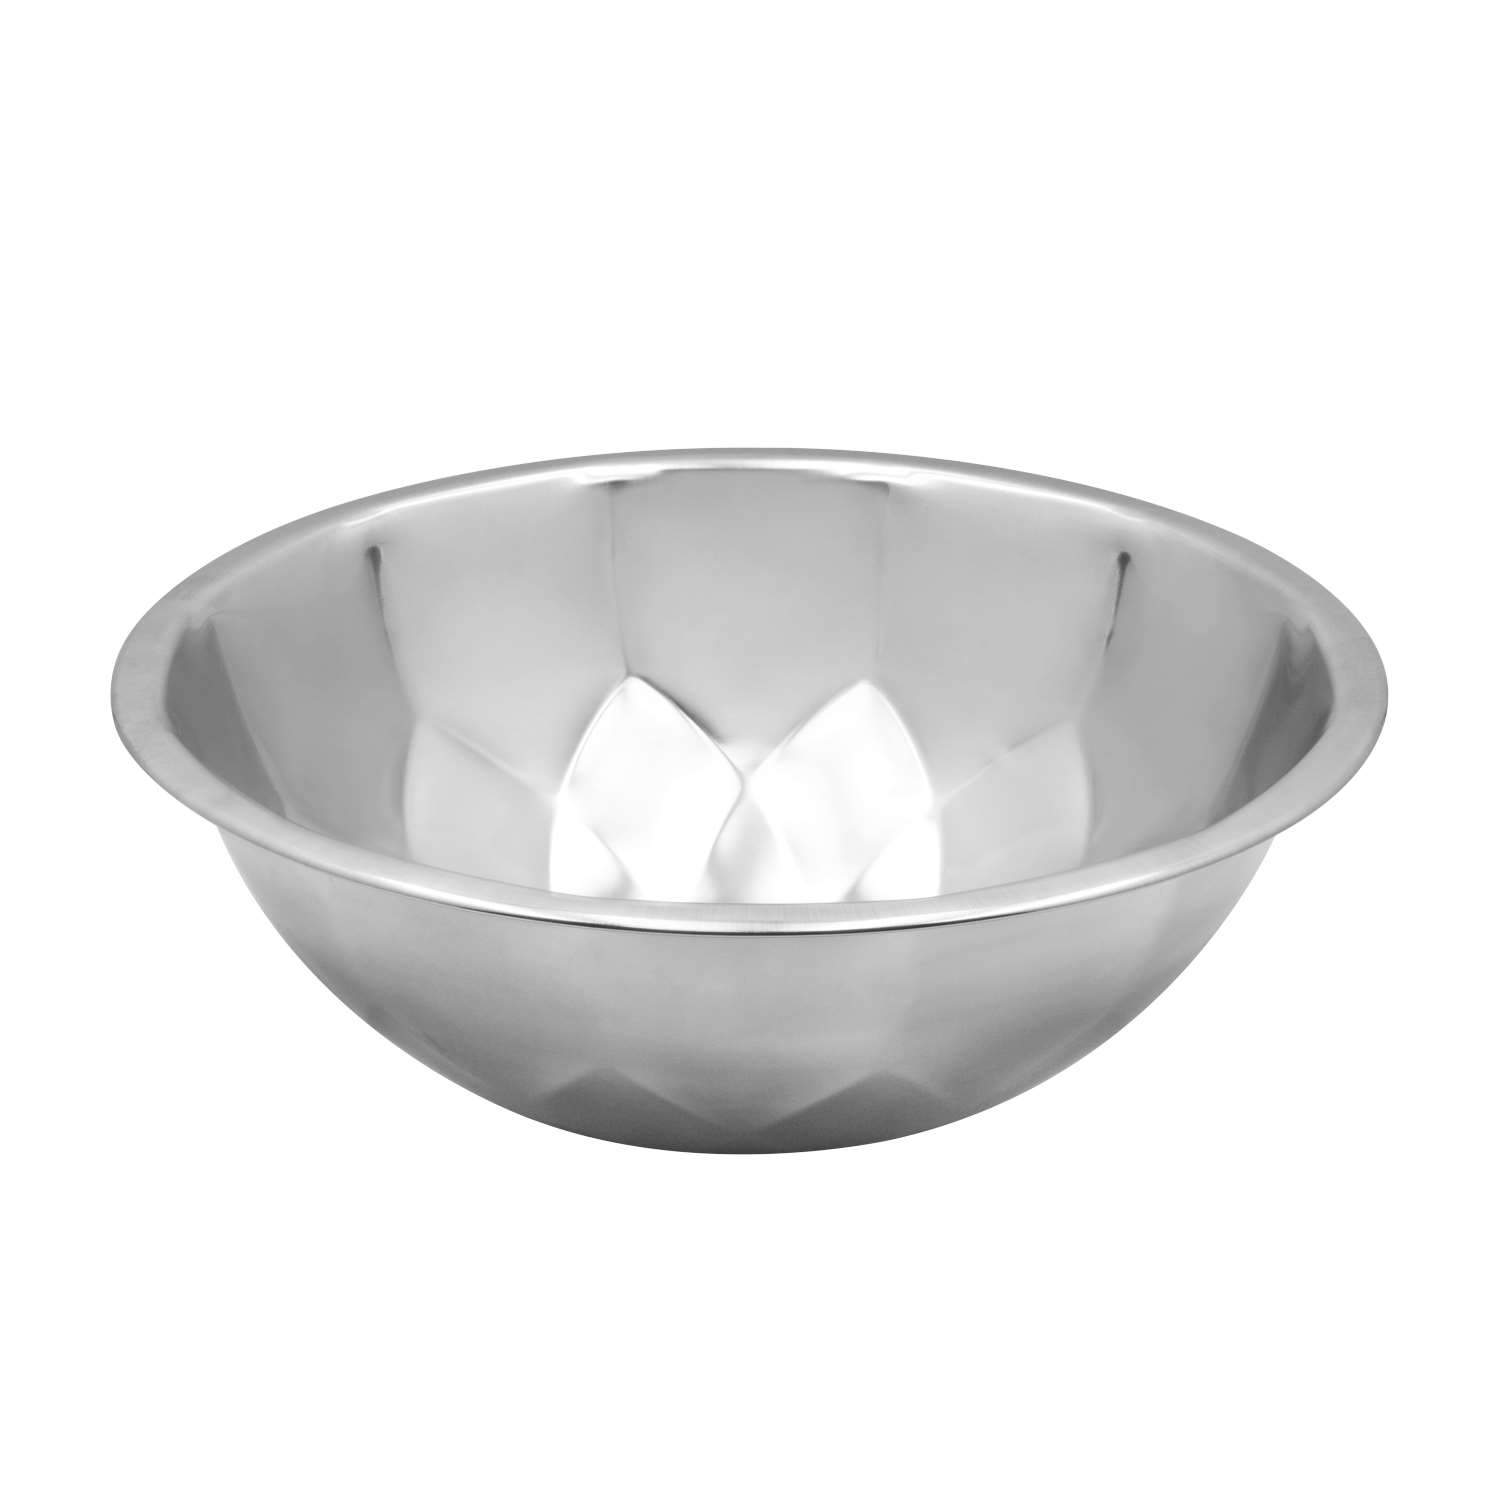 Rk Steel Diamond Bowl, Rk0122, 30 Cm